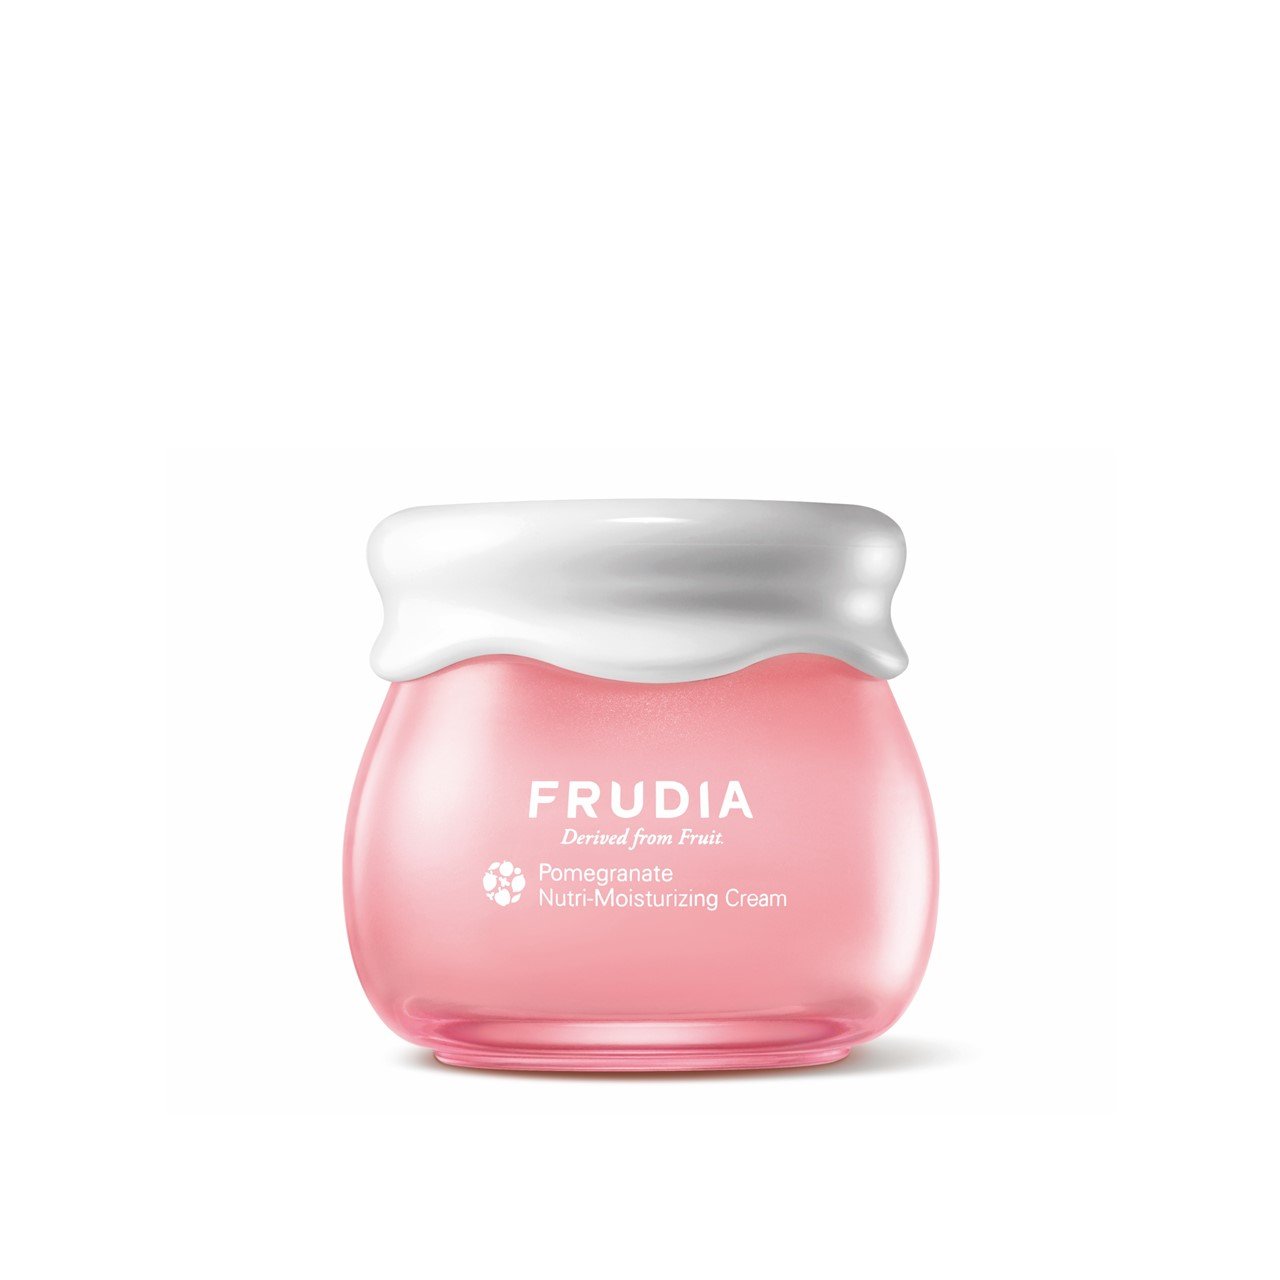 Frudia Pomegranate Nutri-Moisturizing Cream 55g (1.94 oz)